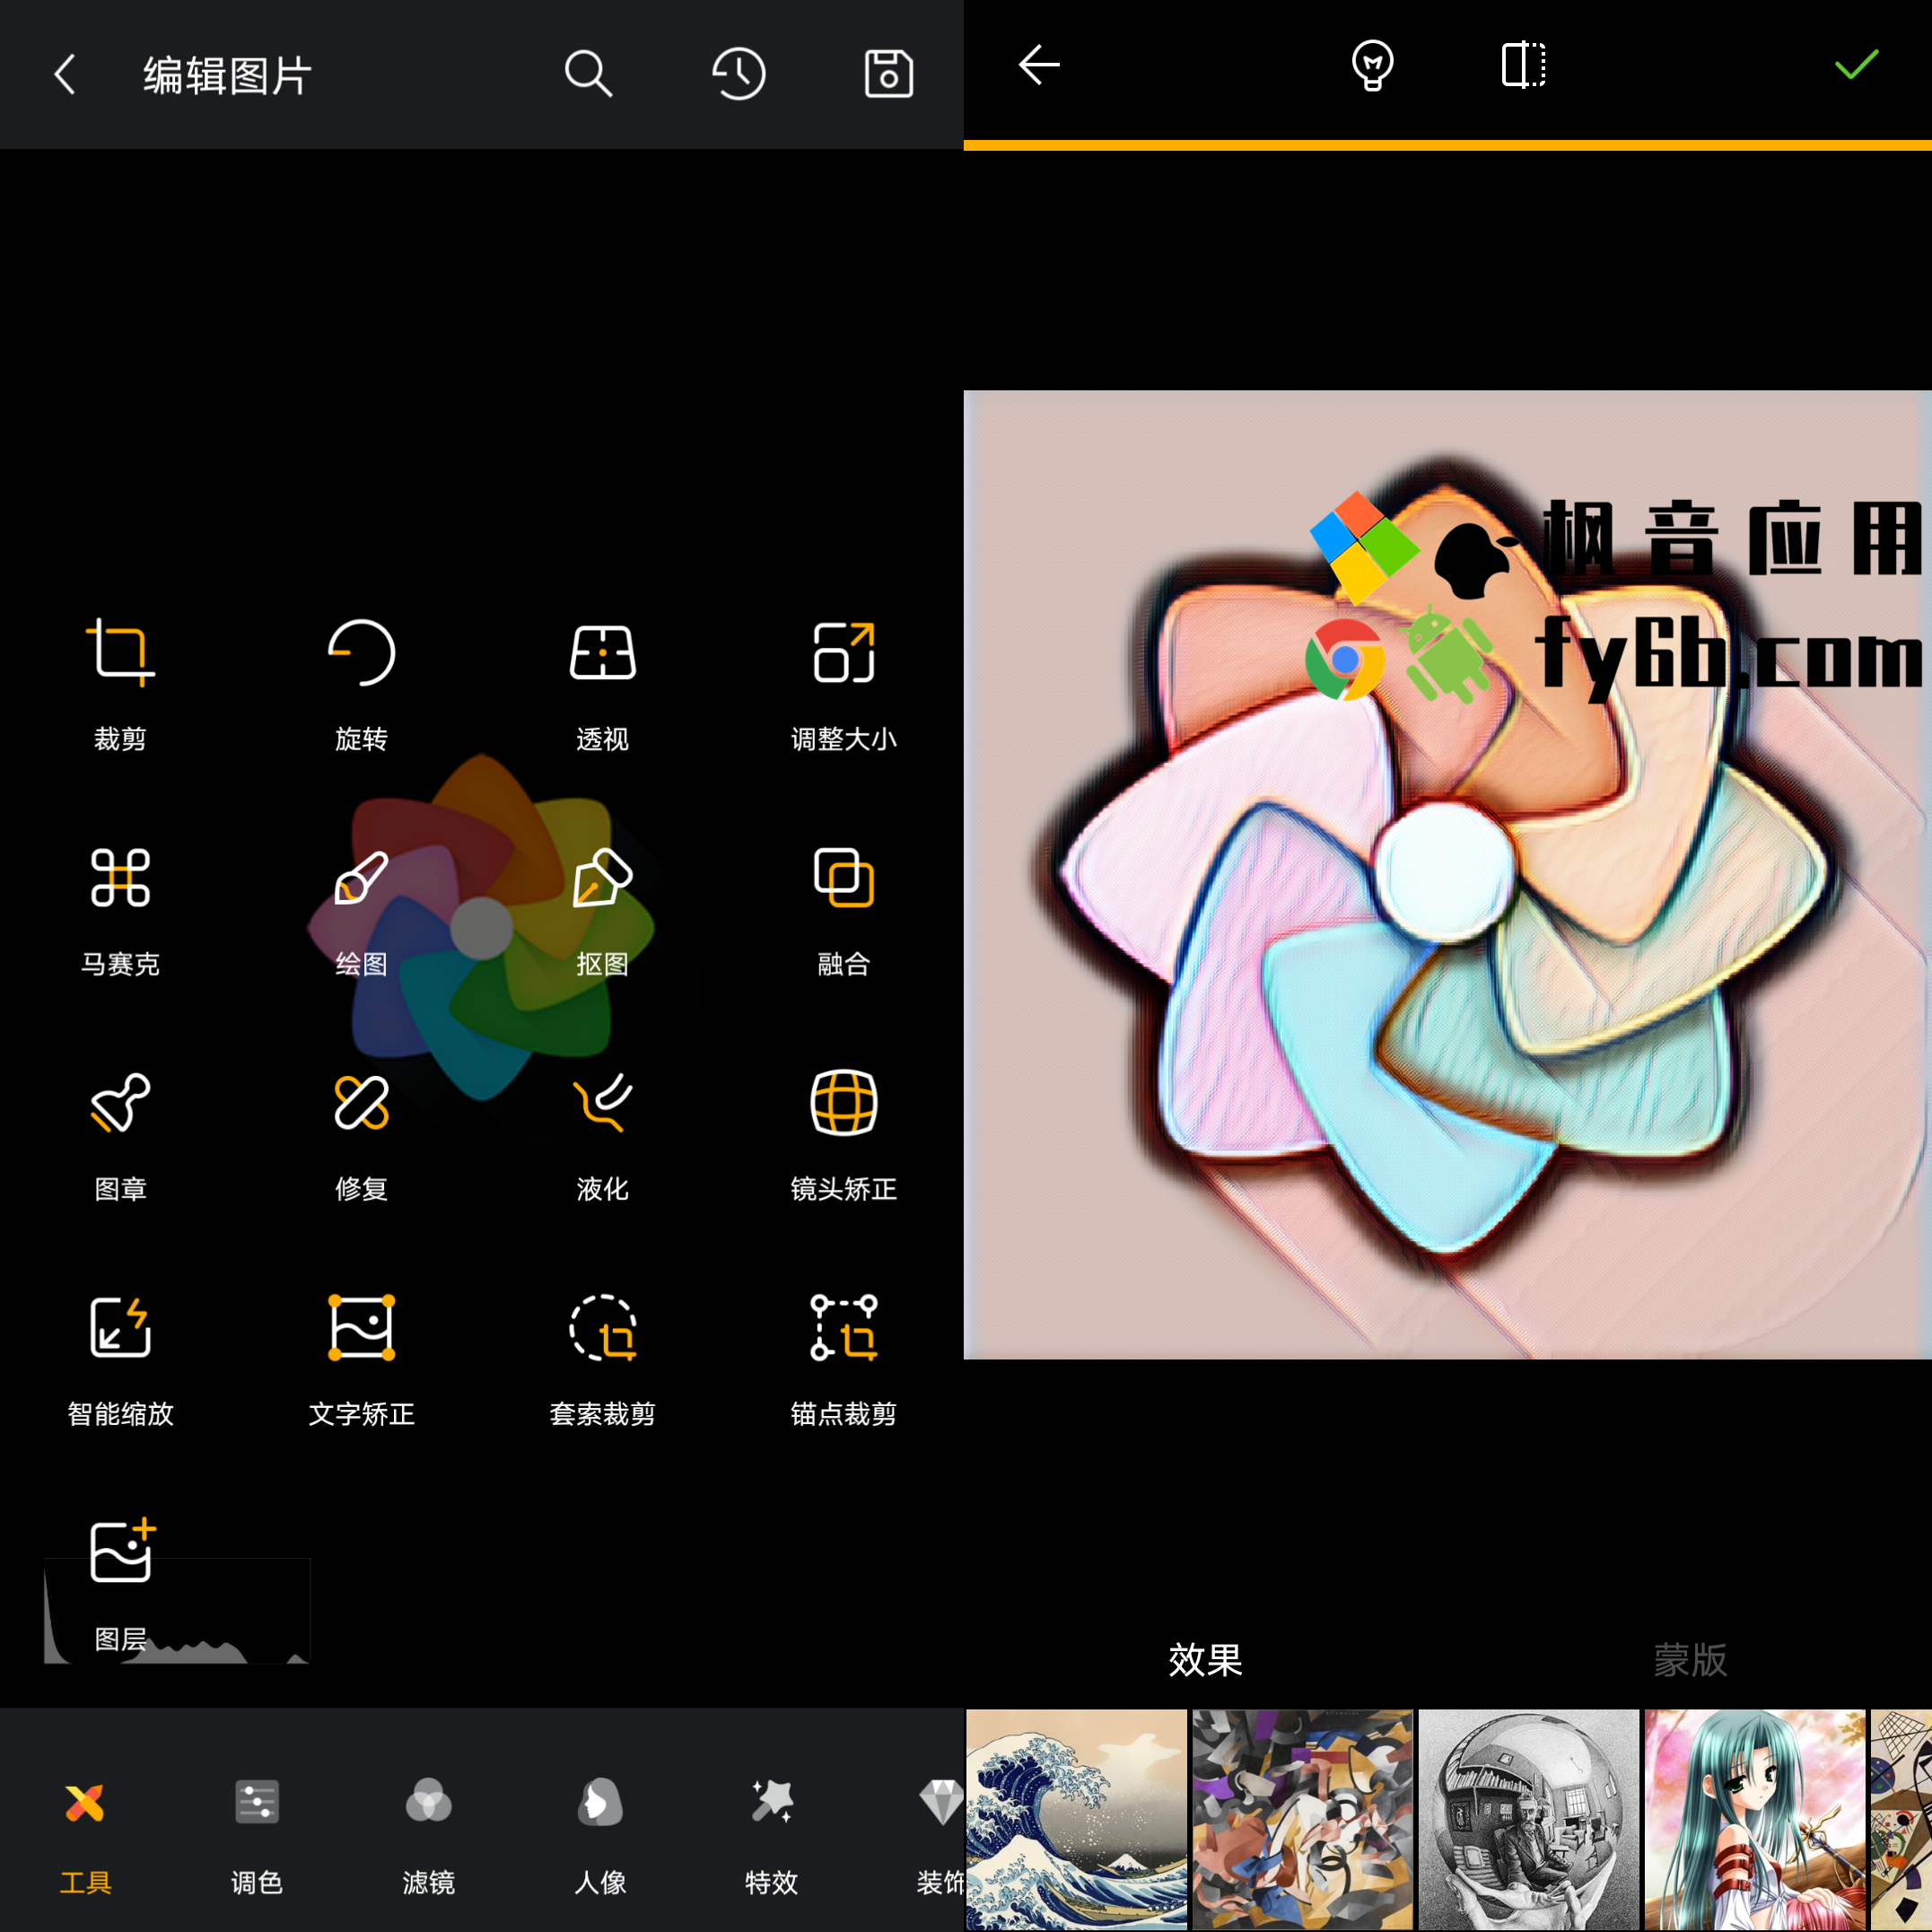 Android P图ToolWiz Photos_10.20 专业版